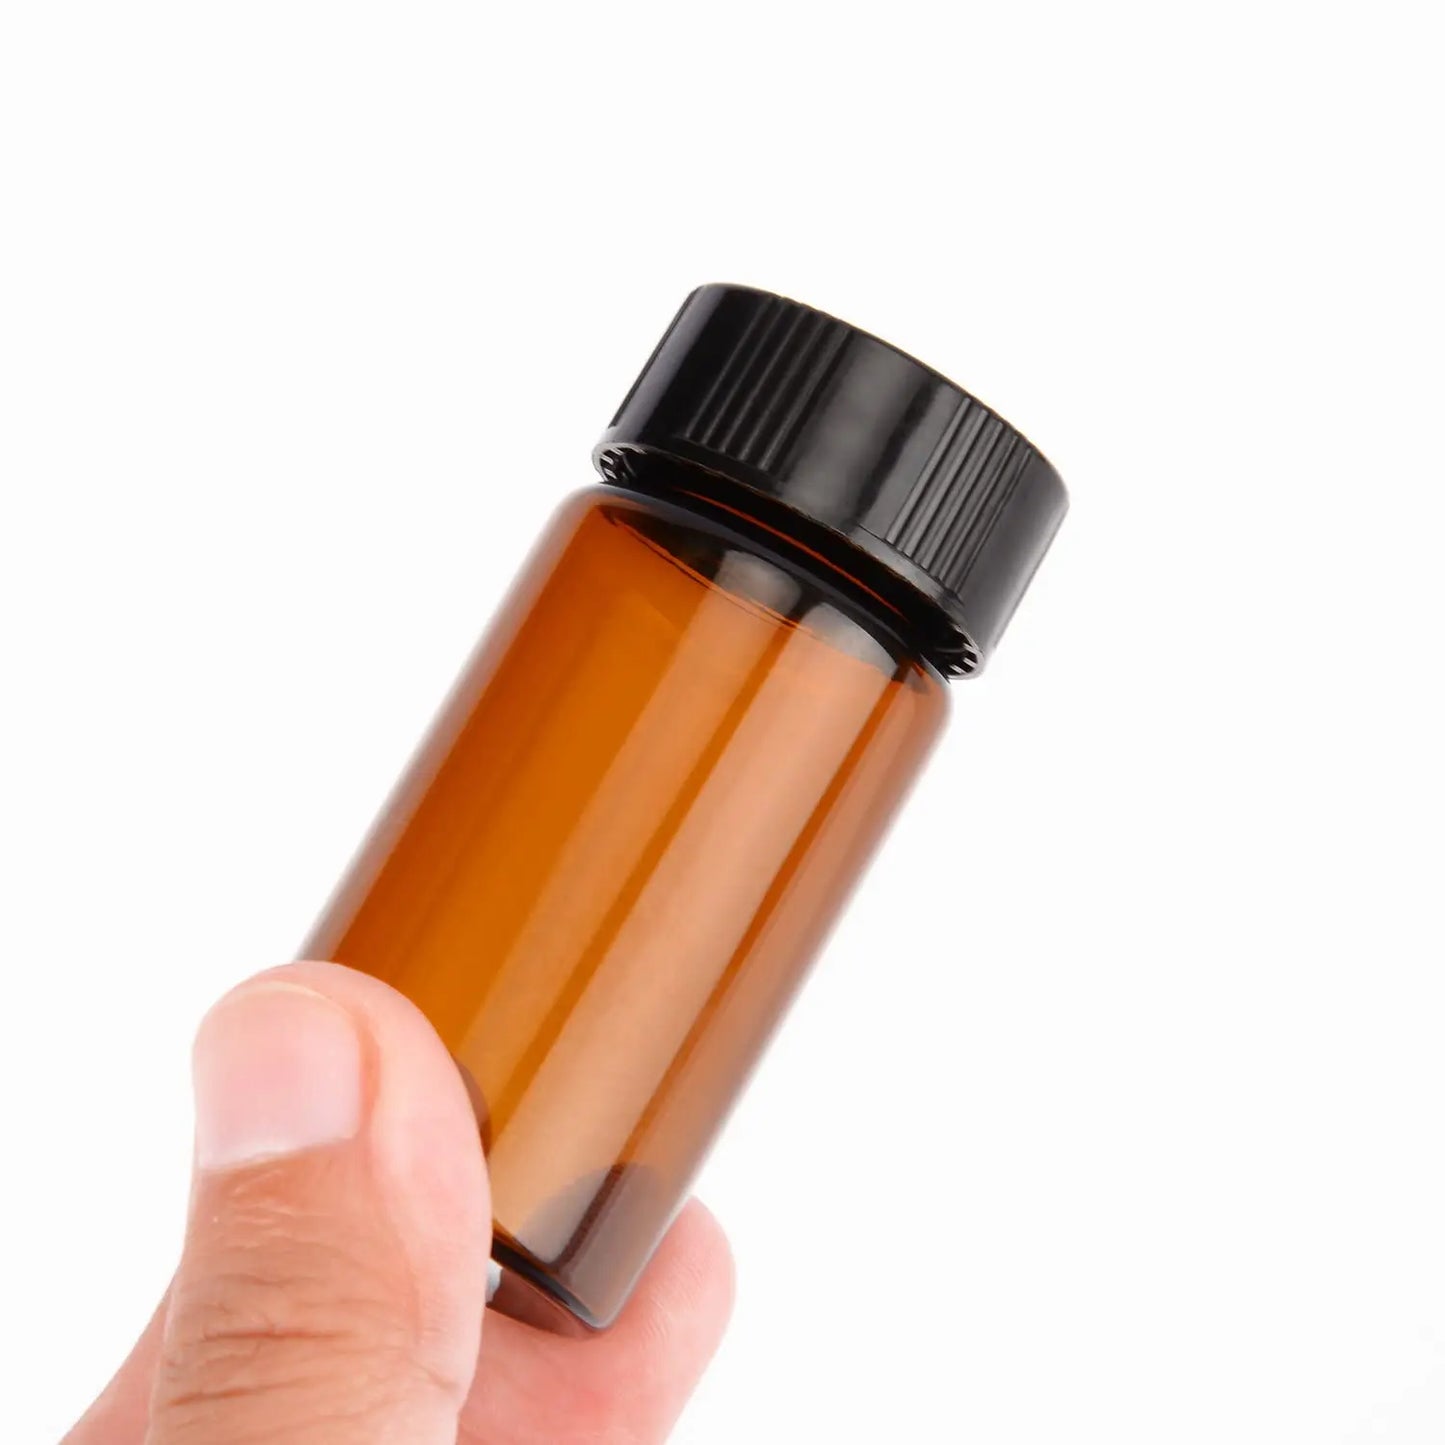 Amber Glass Sample Vials , 20 ml / (0.6 oz), Pack of 20 Tubes & Vials